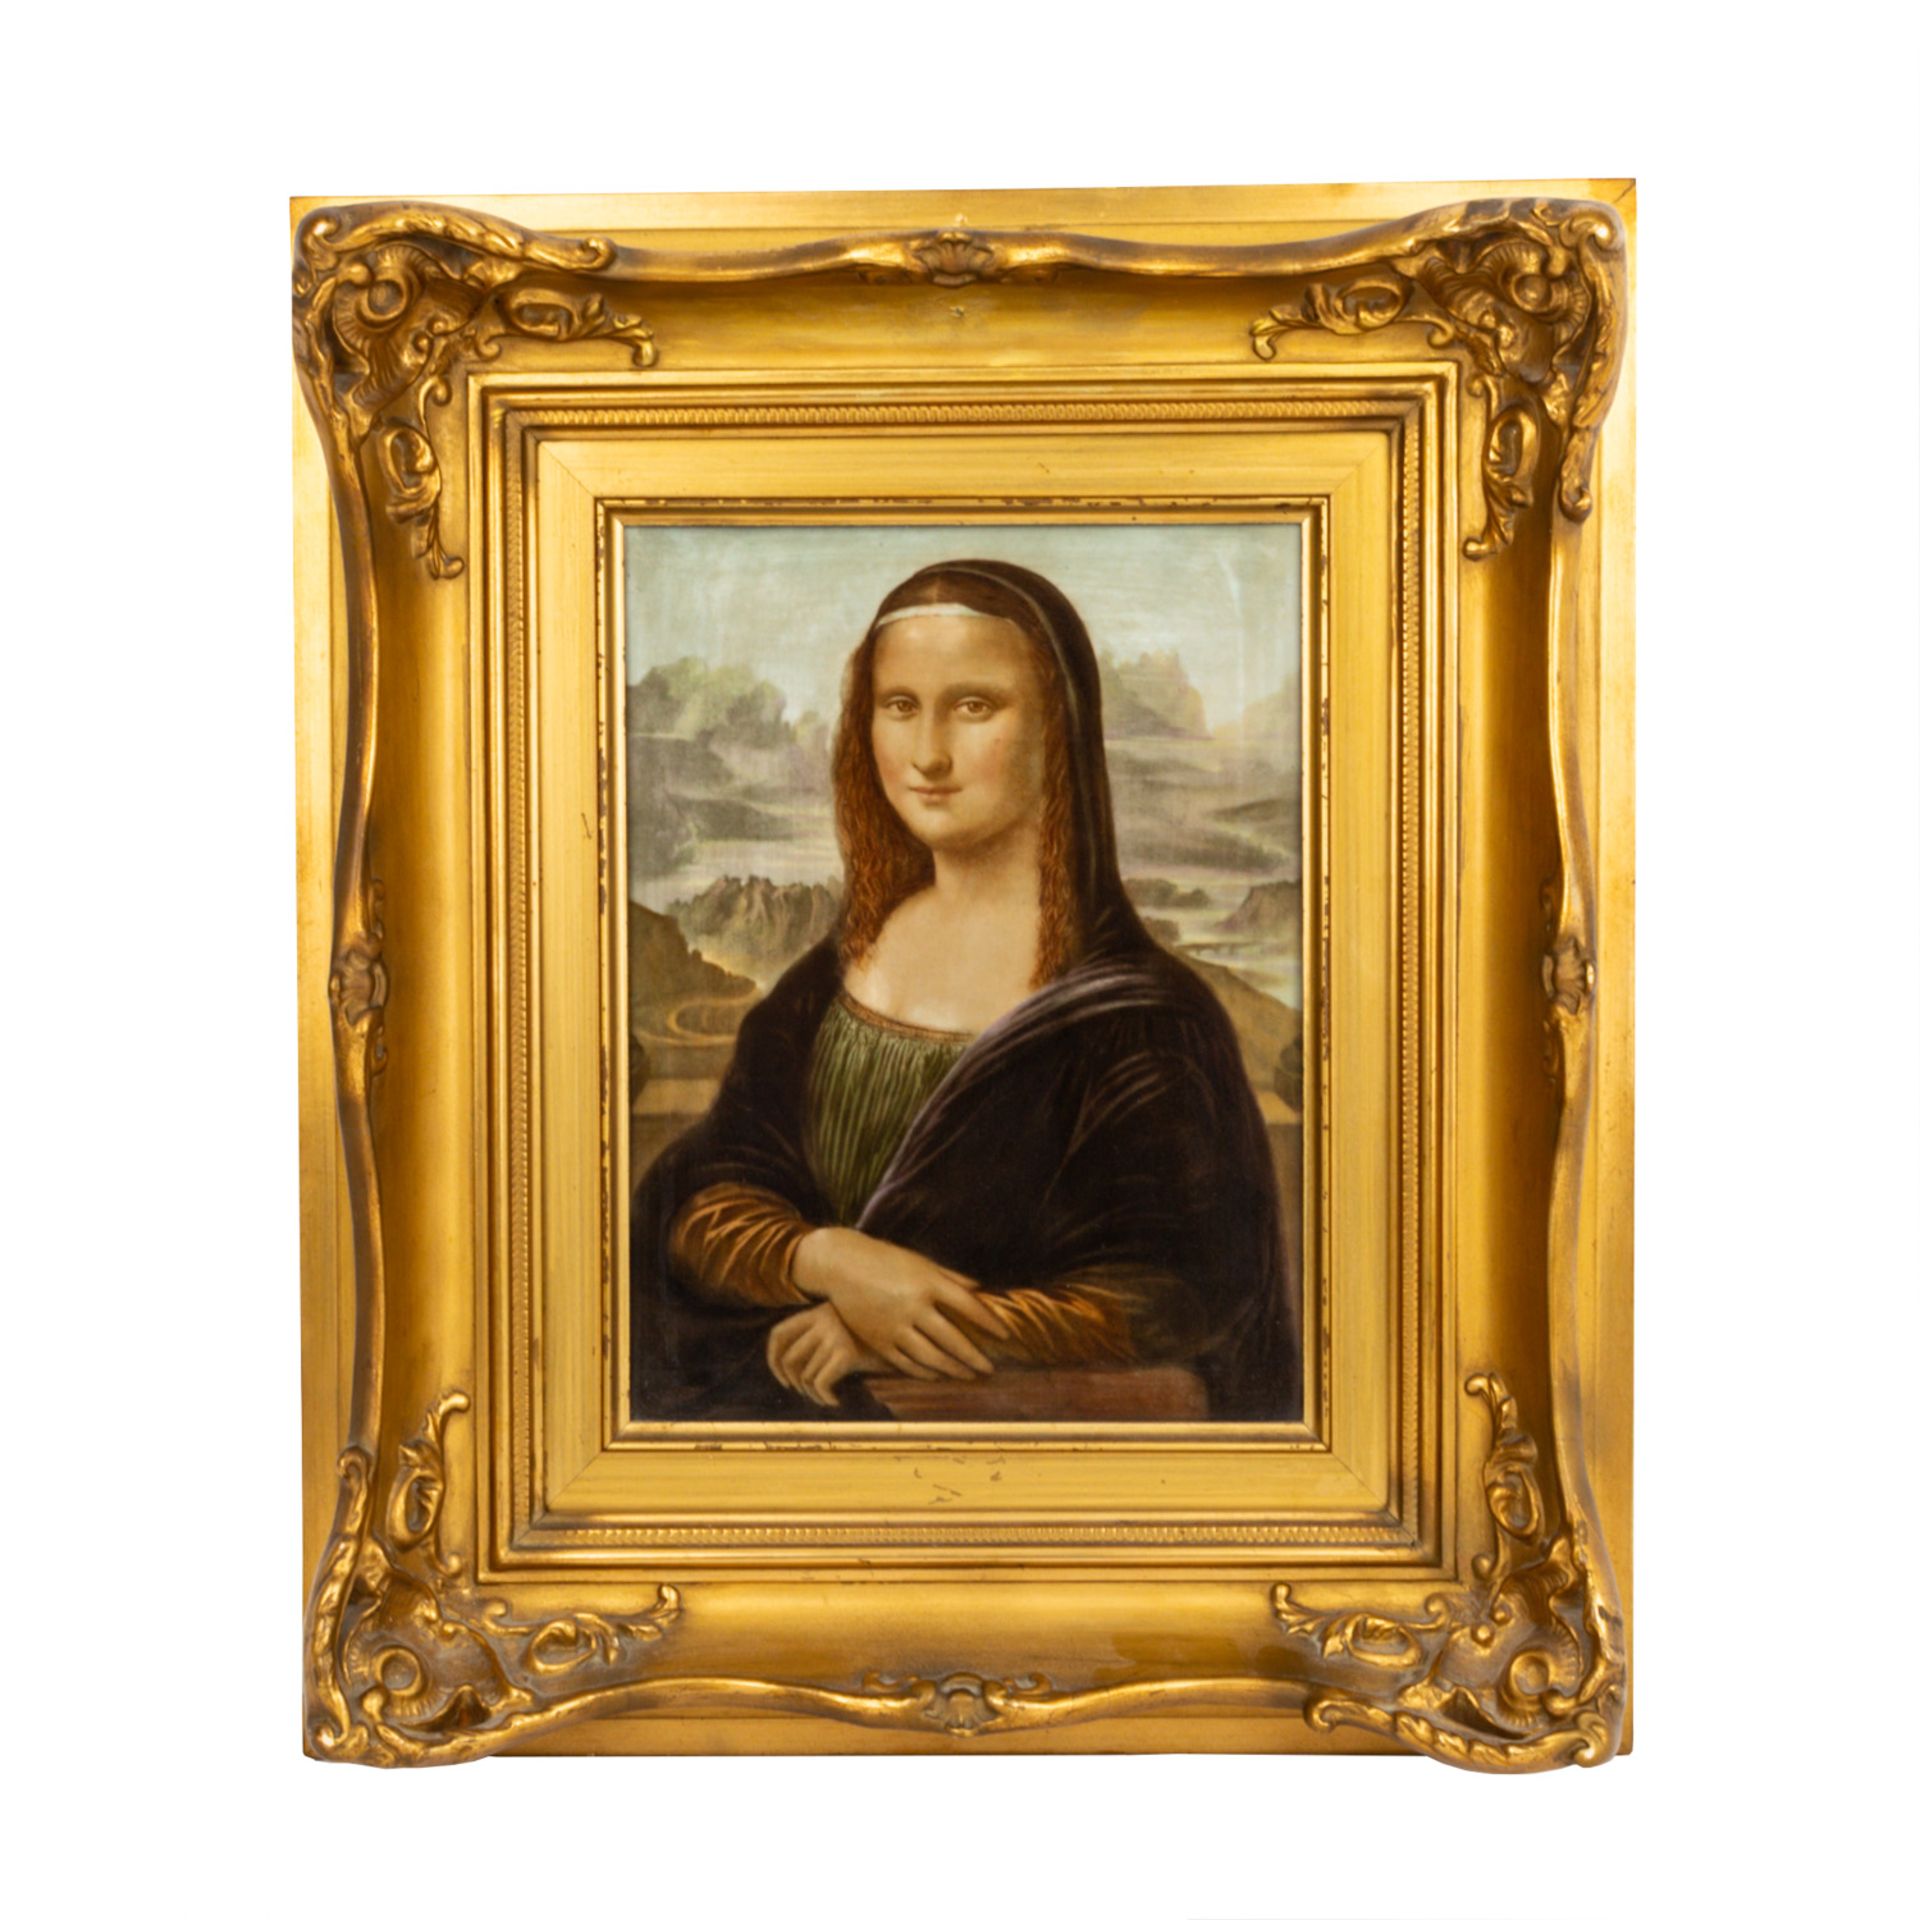 ROSENTHAL, Bildplatte "Mona Lisa" Nach Leonardo da Vinci (1452-1519), braune Stempelma - Image 2 of 4